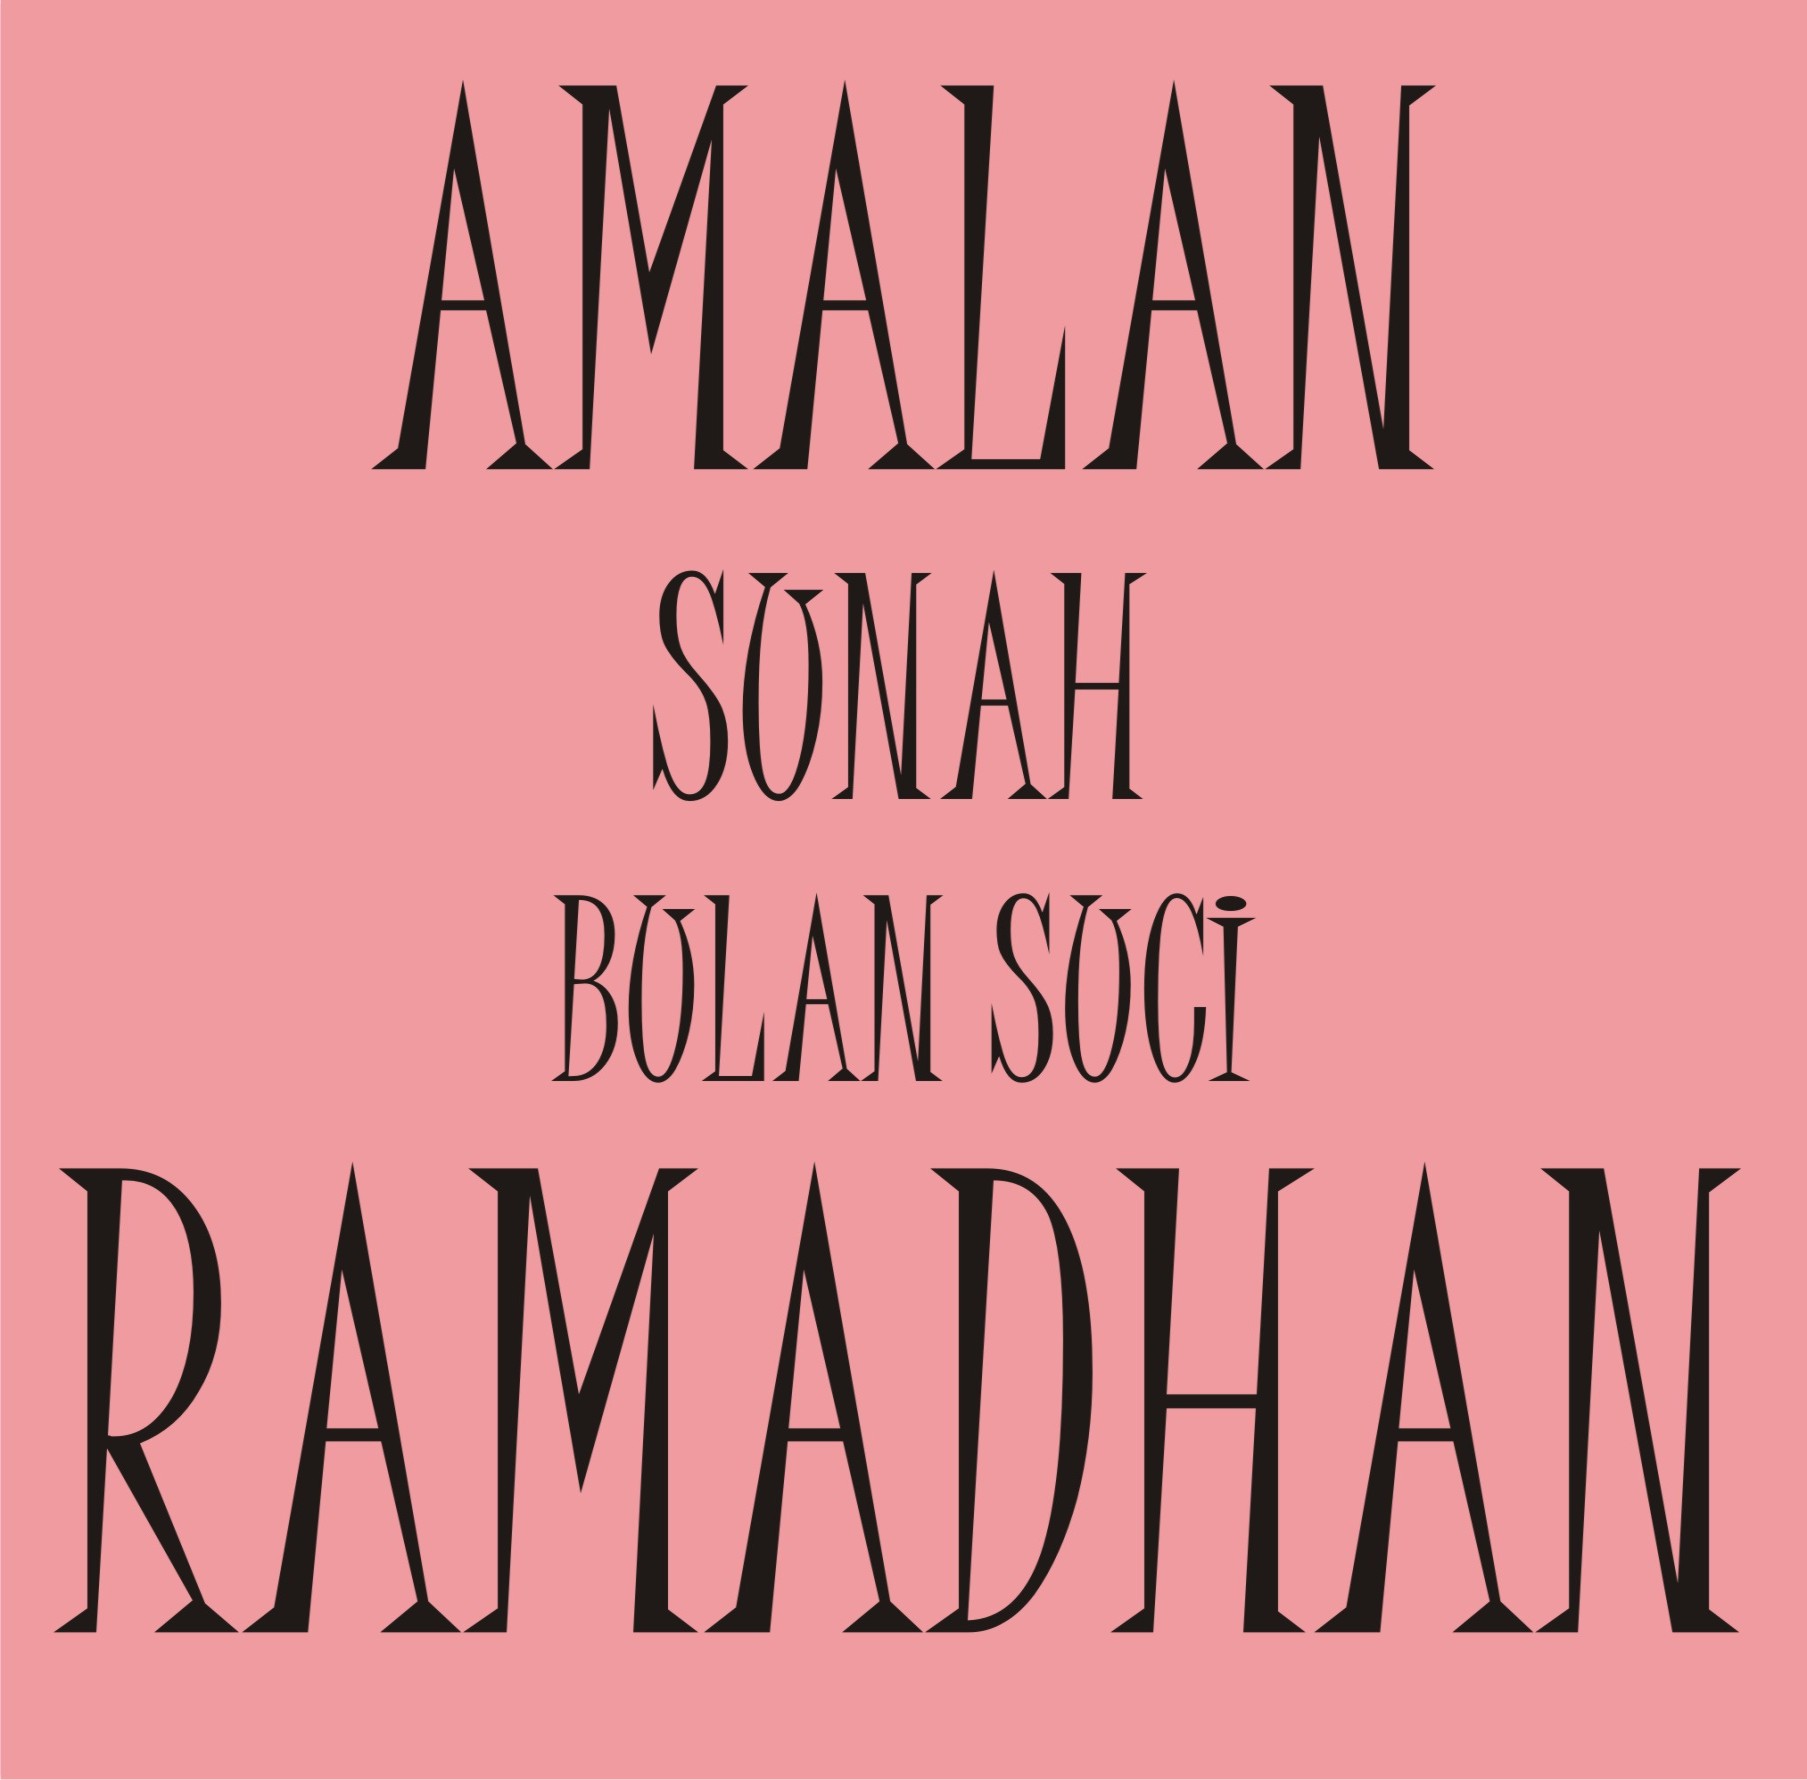 You are currently viewing AMALAN SUNAH BULAN SUCI RAMADHAN